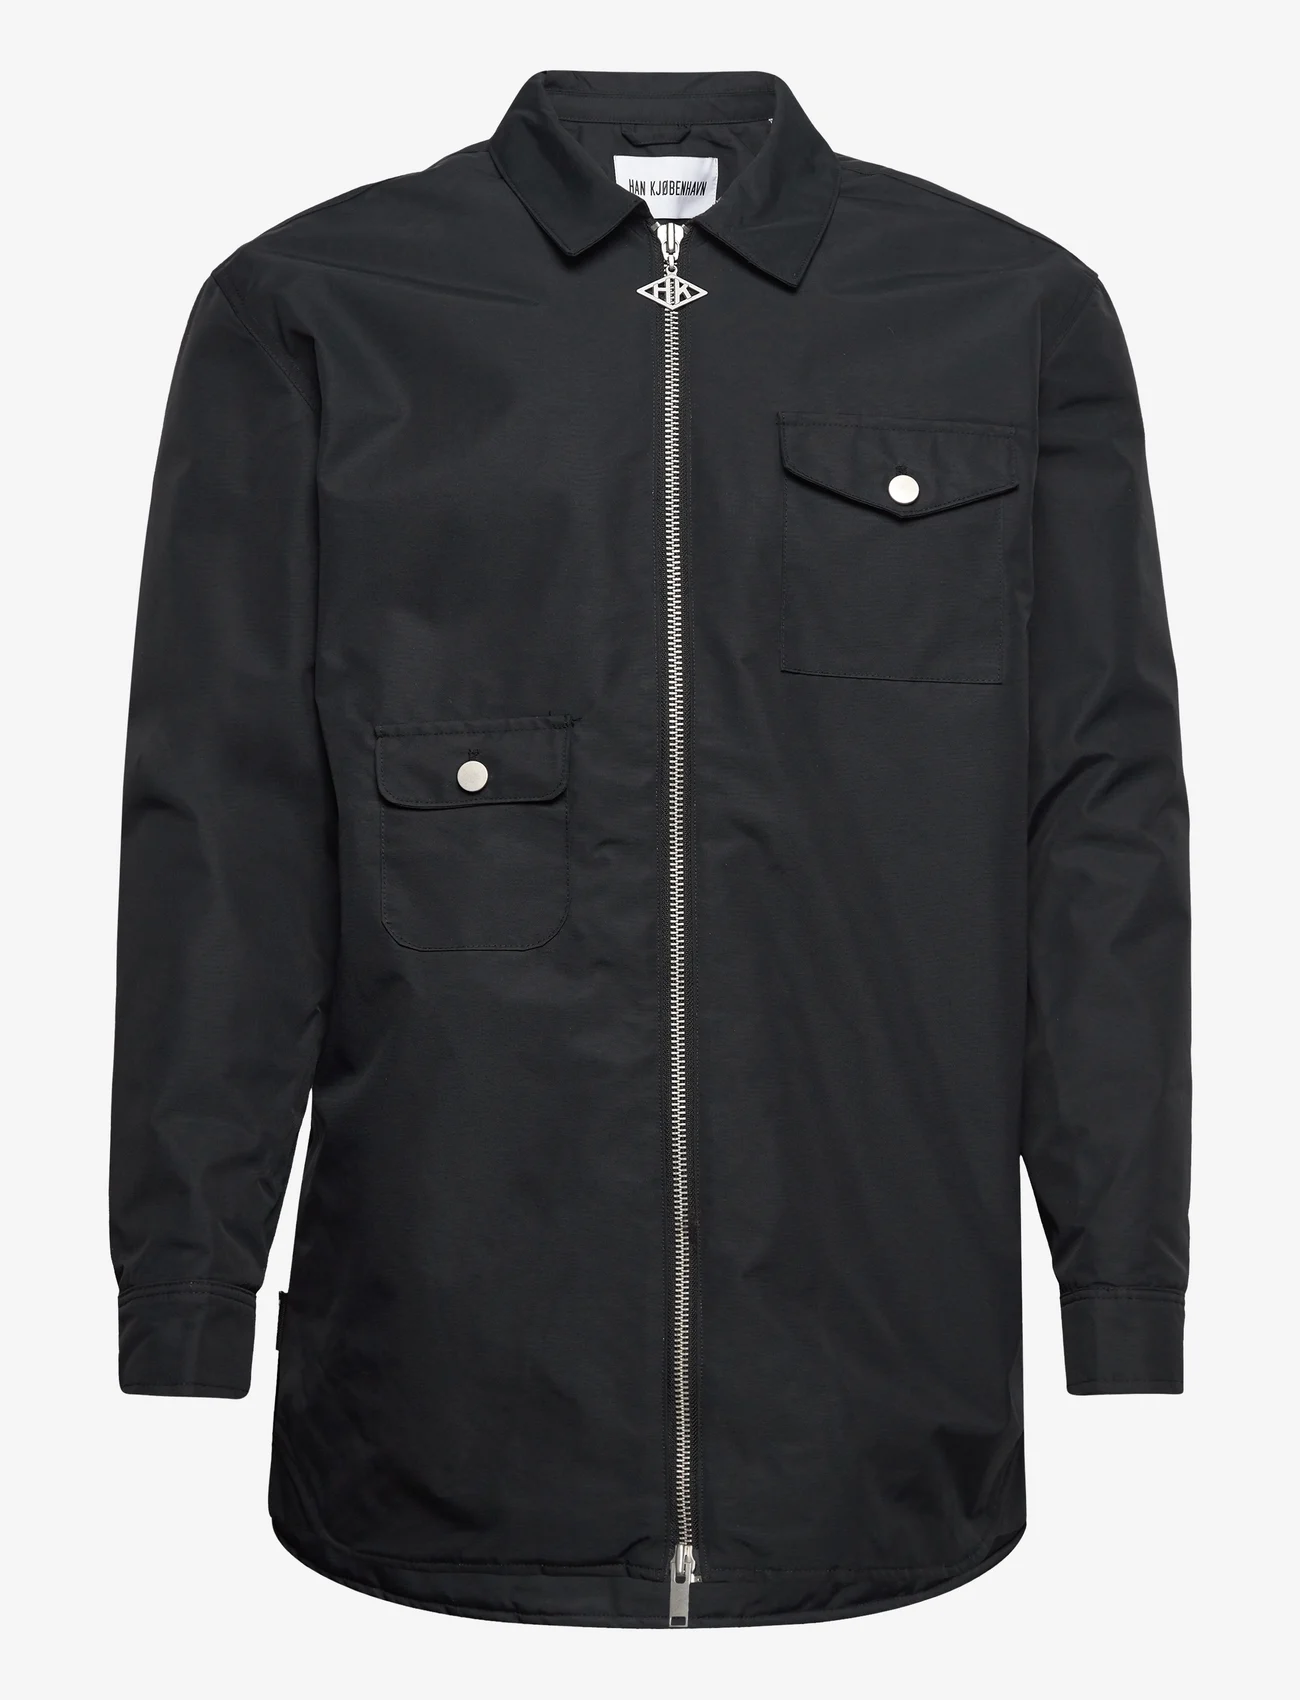 HAN Kjøbenhavn - Army Shirt Zip Long - black - 0